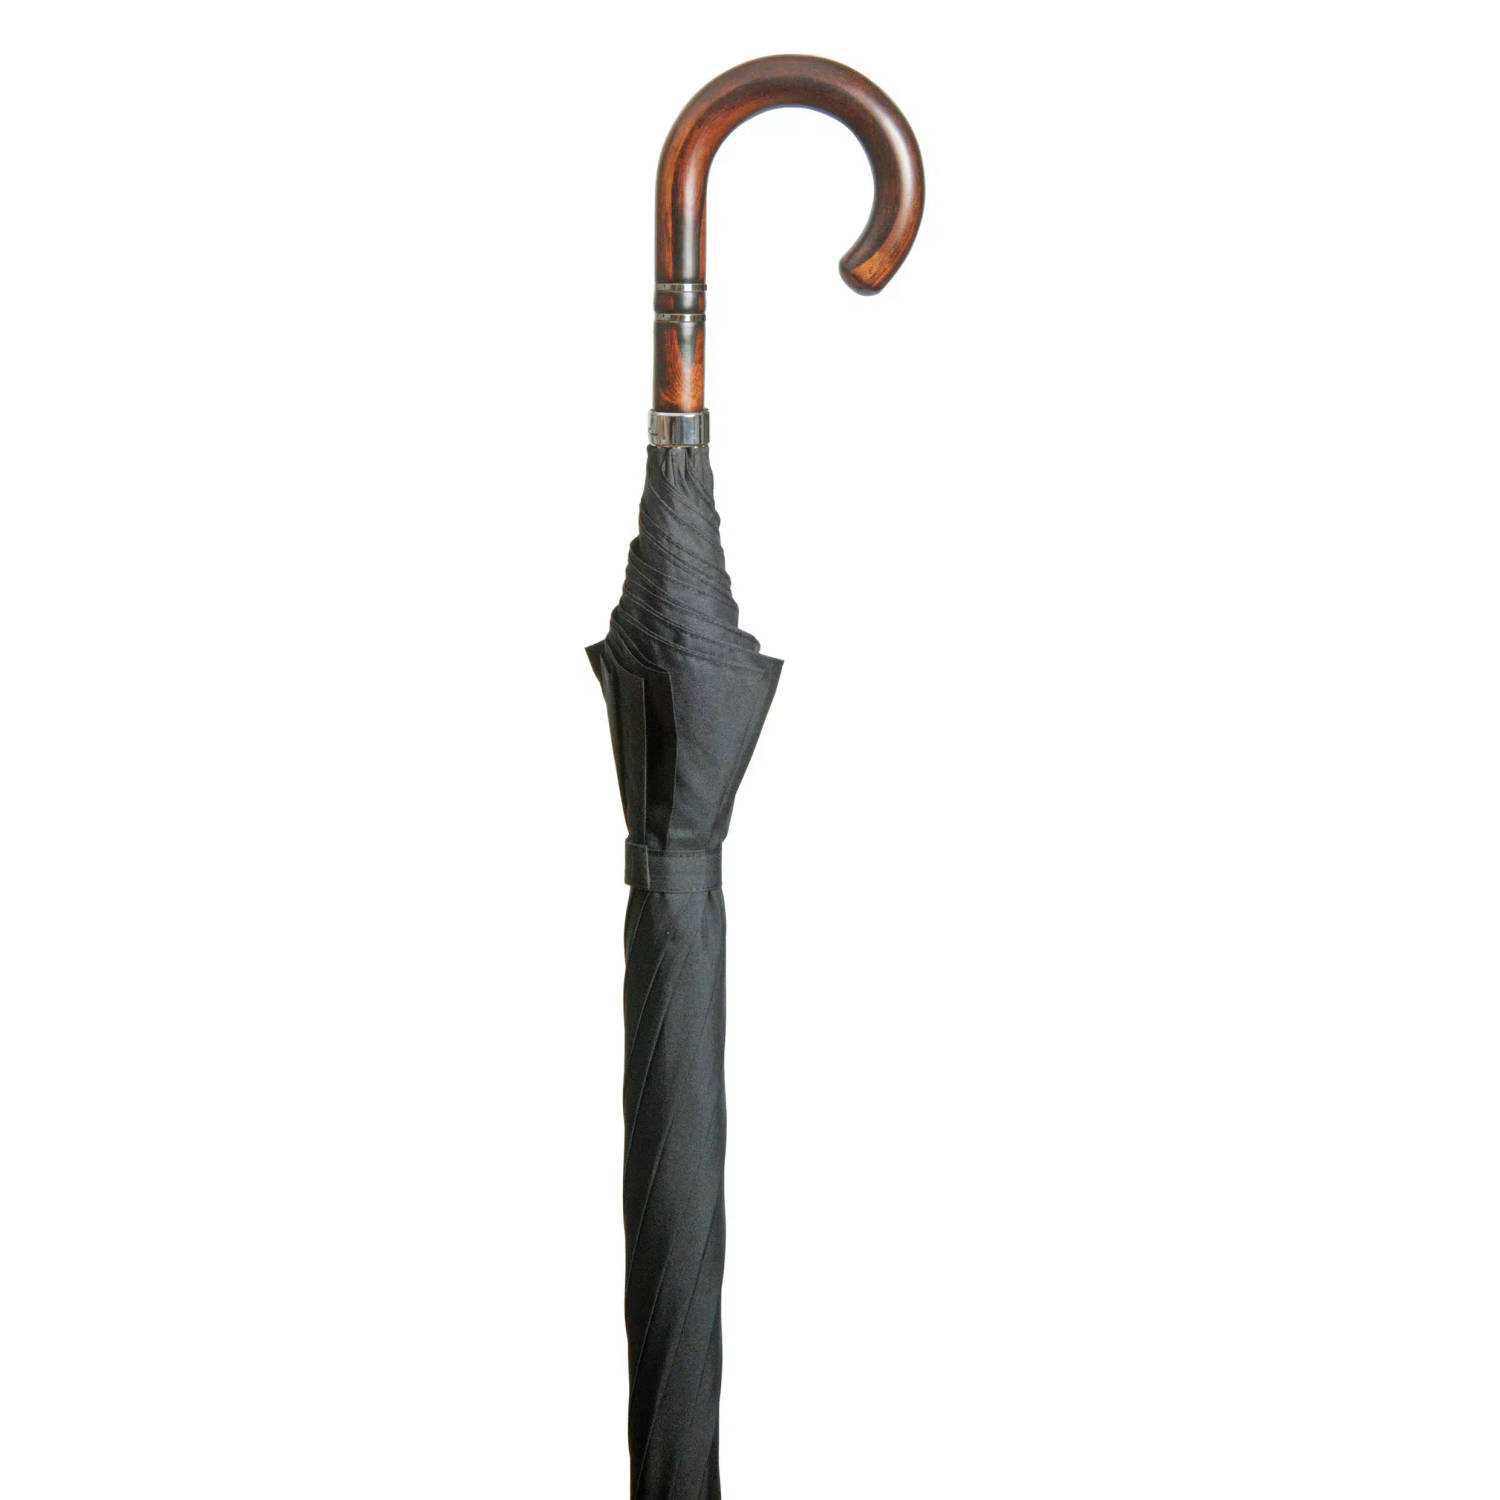 Classic Canes Paraplu - Acacia hout handvat - Zwart polyester doek - Doorsnee doek 110 cm - Lengte 96 cm